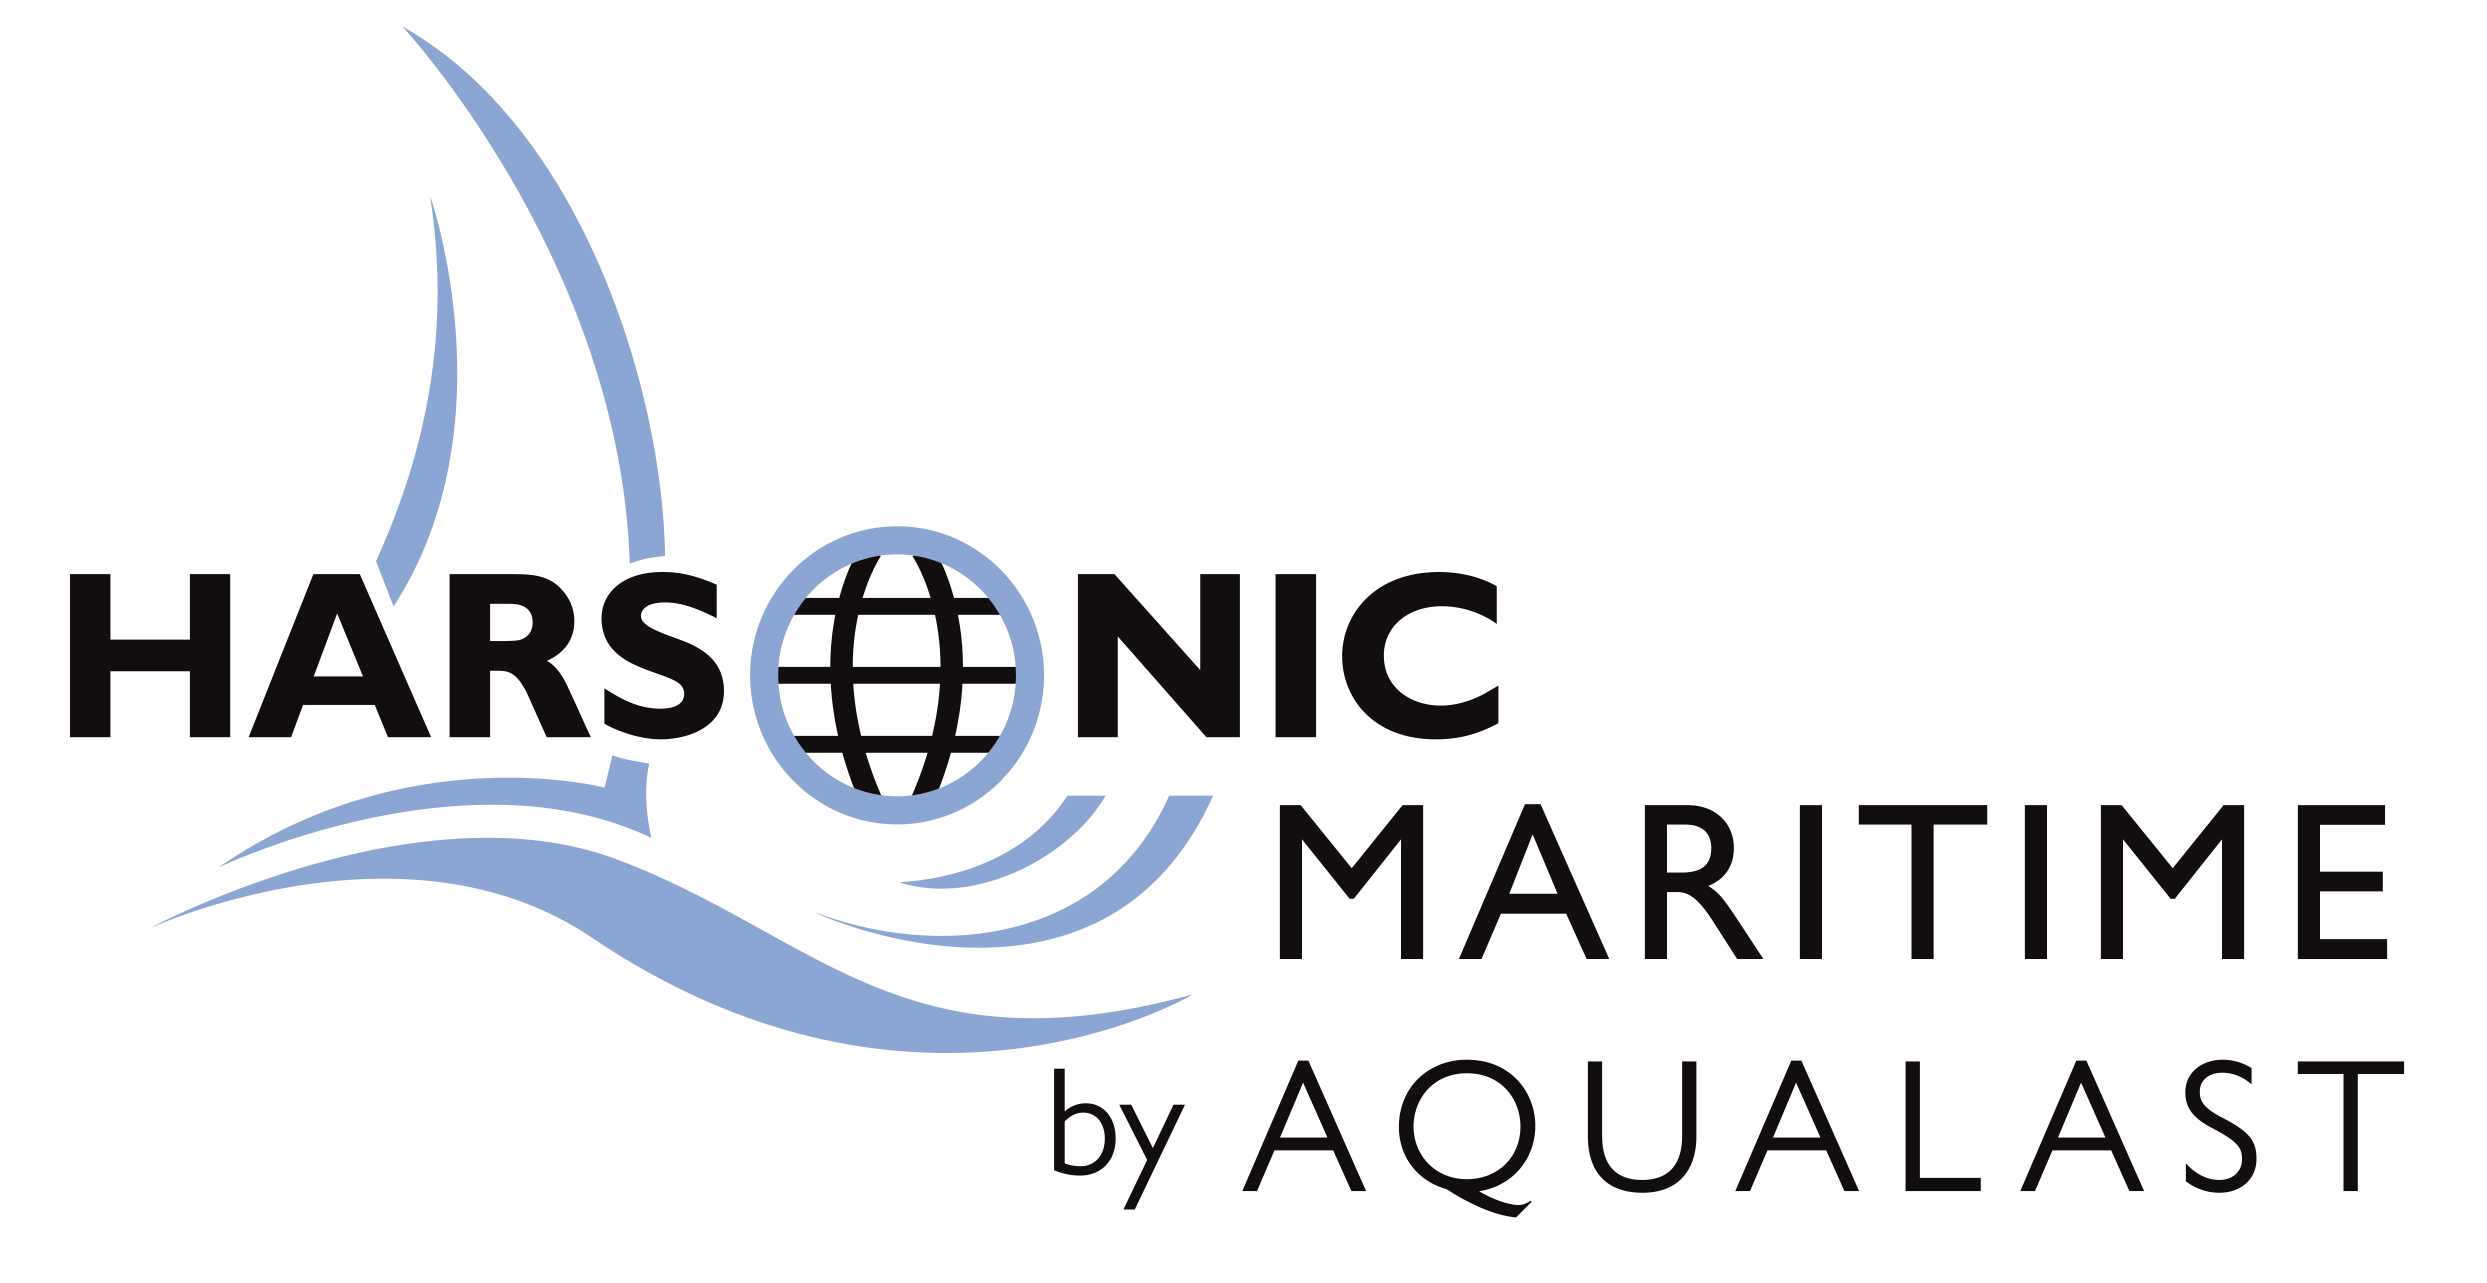 Harsonic Maritime by Aqualast